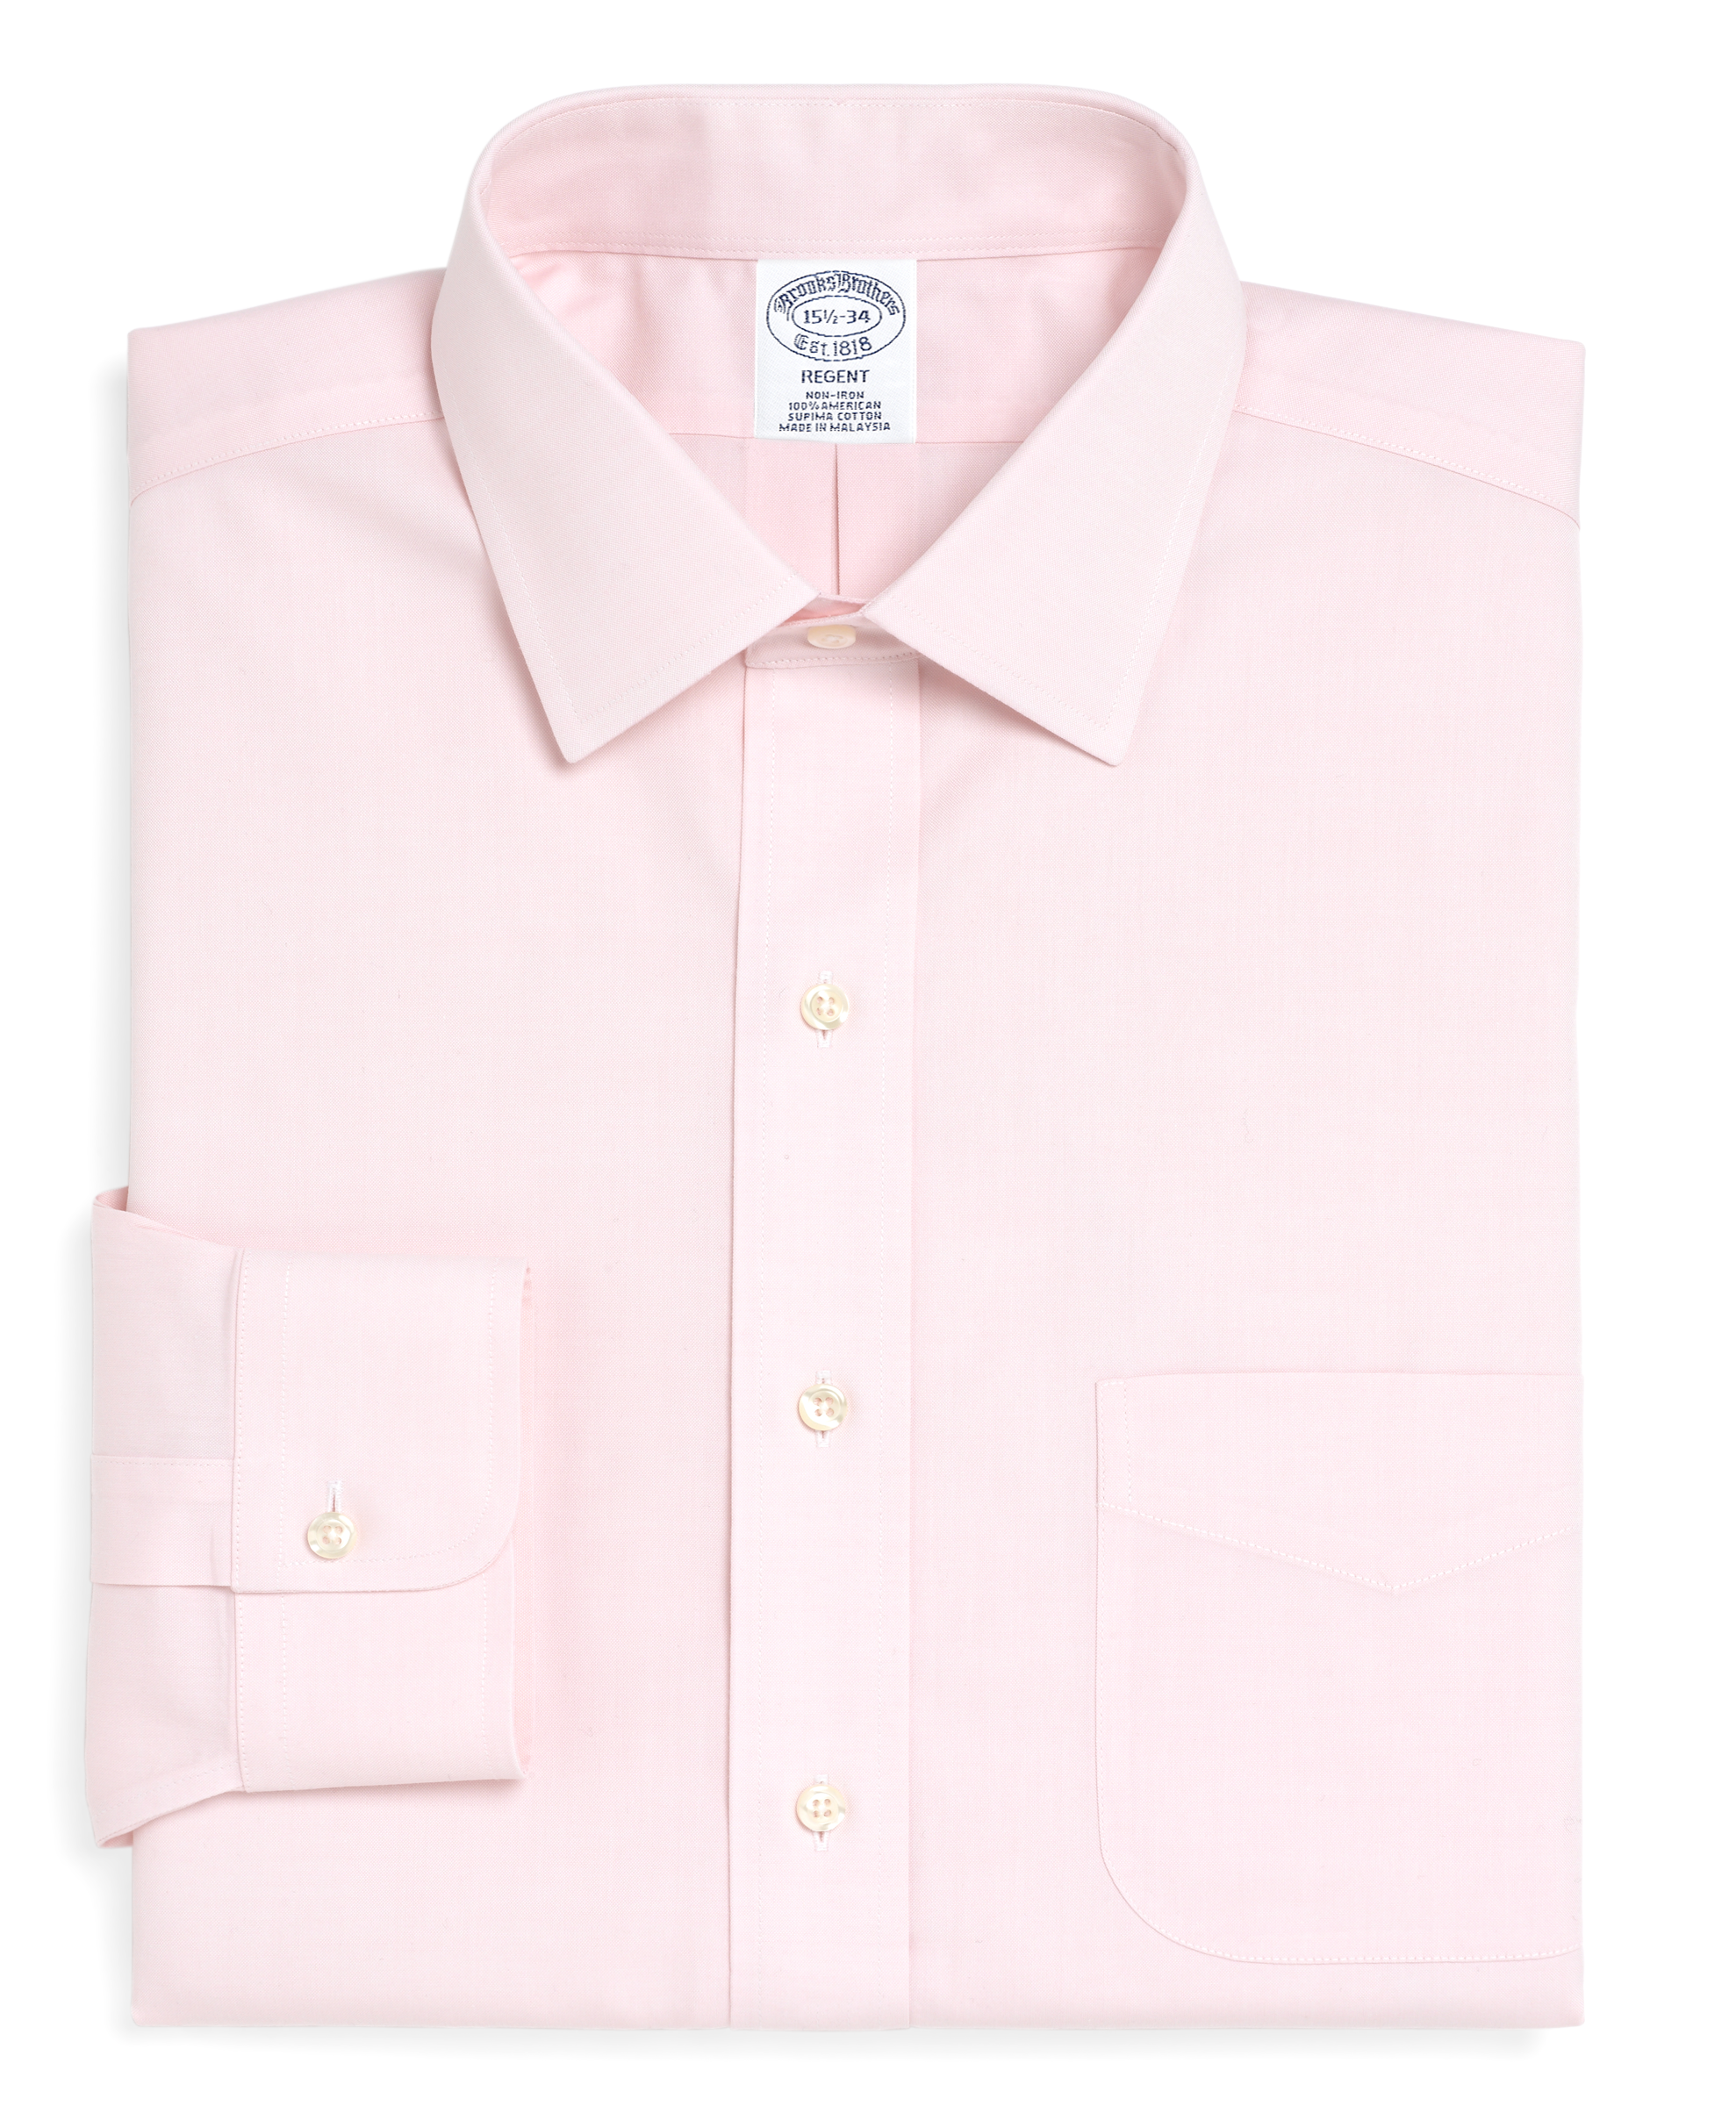 Brooks-Brothers-Ni-Reg-Spread-Collar-Dress-Shirt-Medium-Pink-000100009326-069